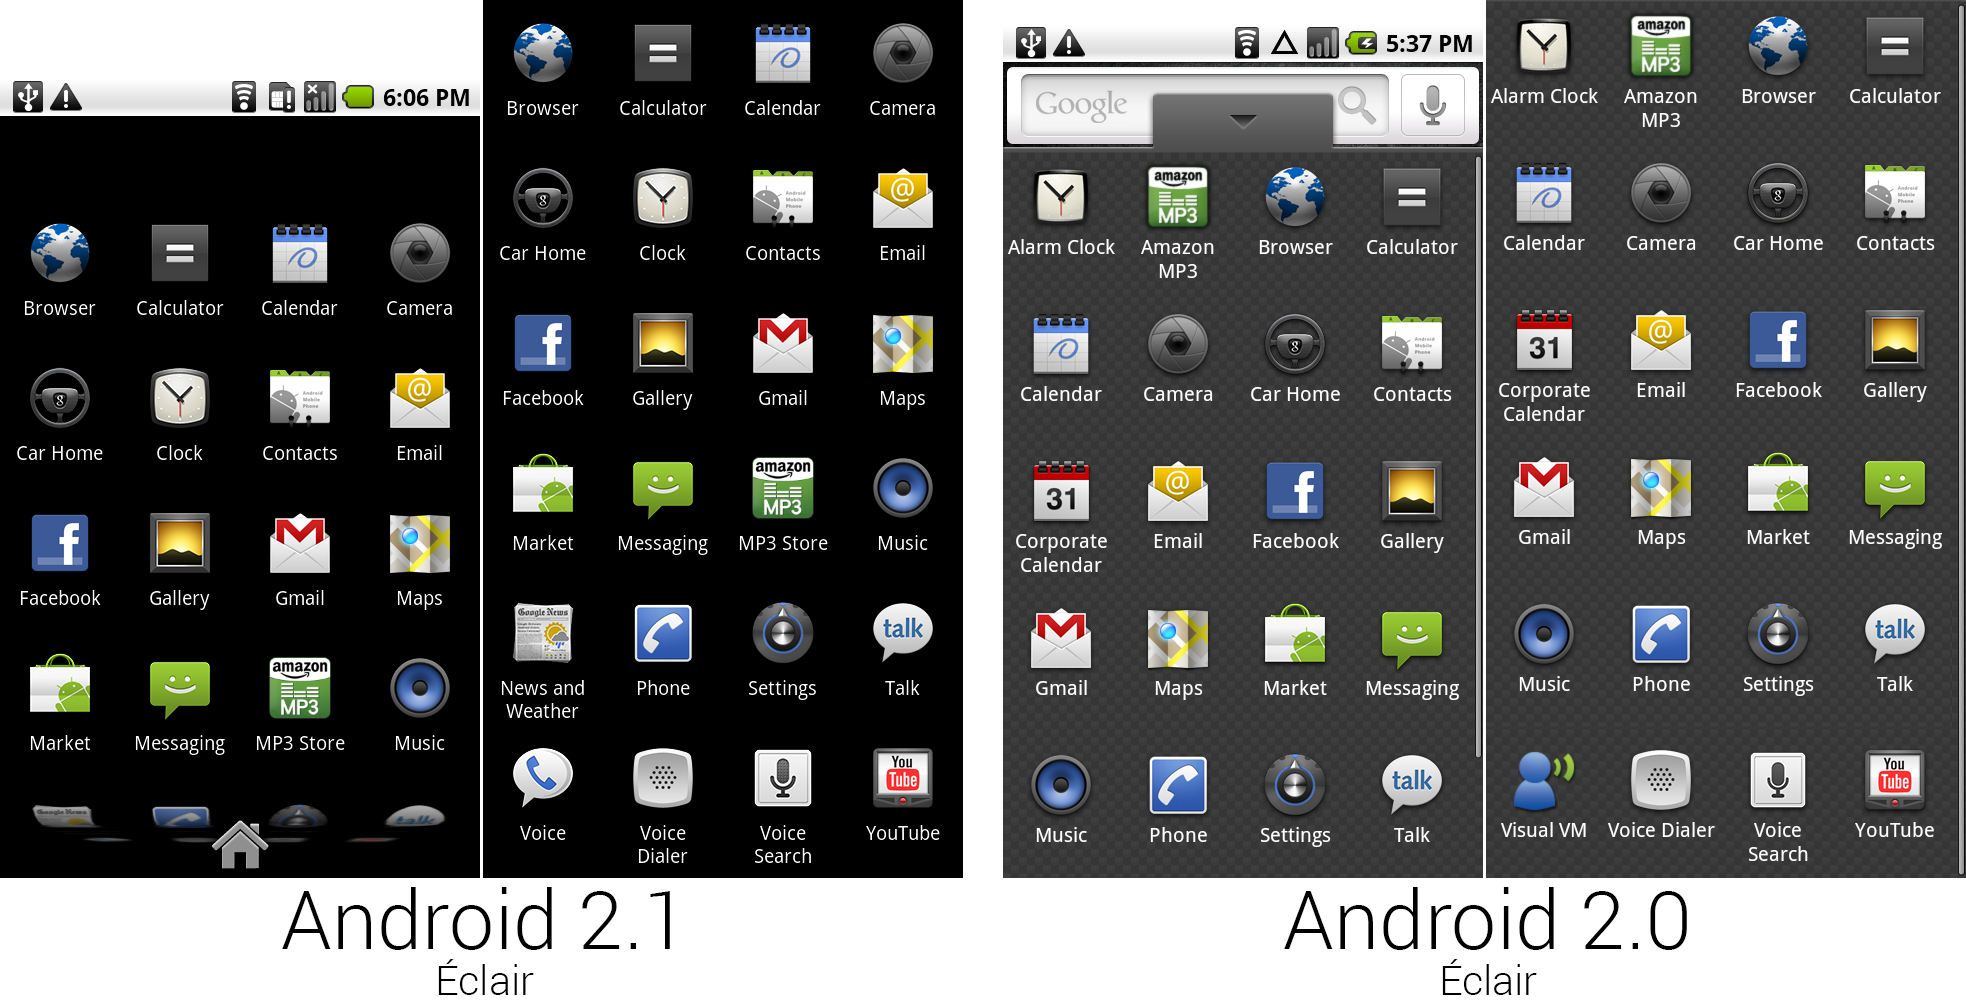 002 андроид. Интерфейс андроид 2. Android 2.0 Eclair. Интерфейс Android 2.3. Андроид 2.1.